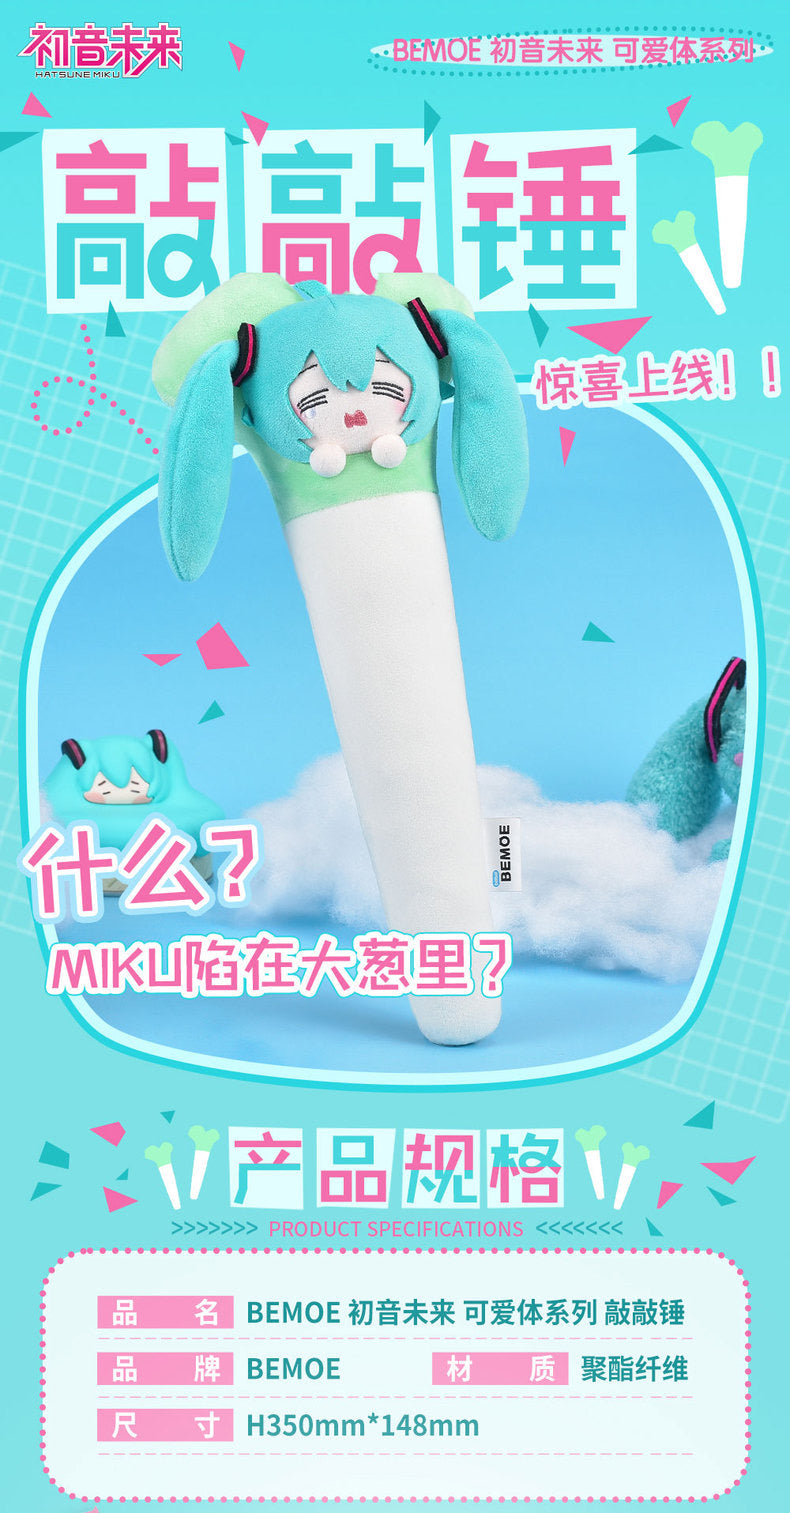 (Pre-Order) Hatsune Miku - Leek Hammer Plush